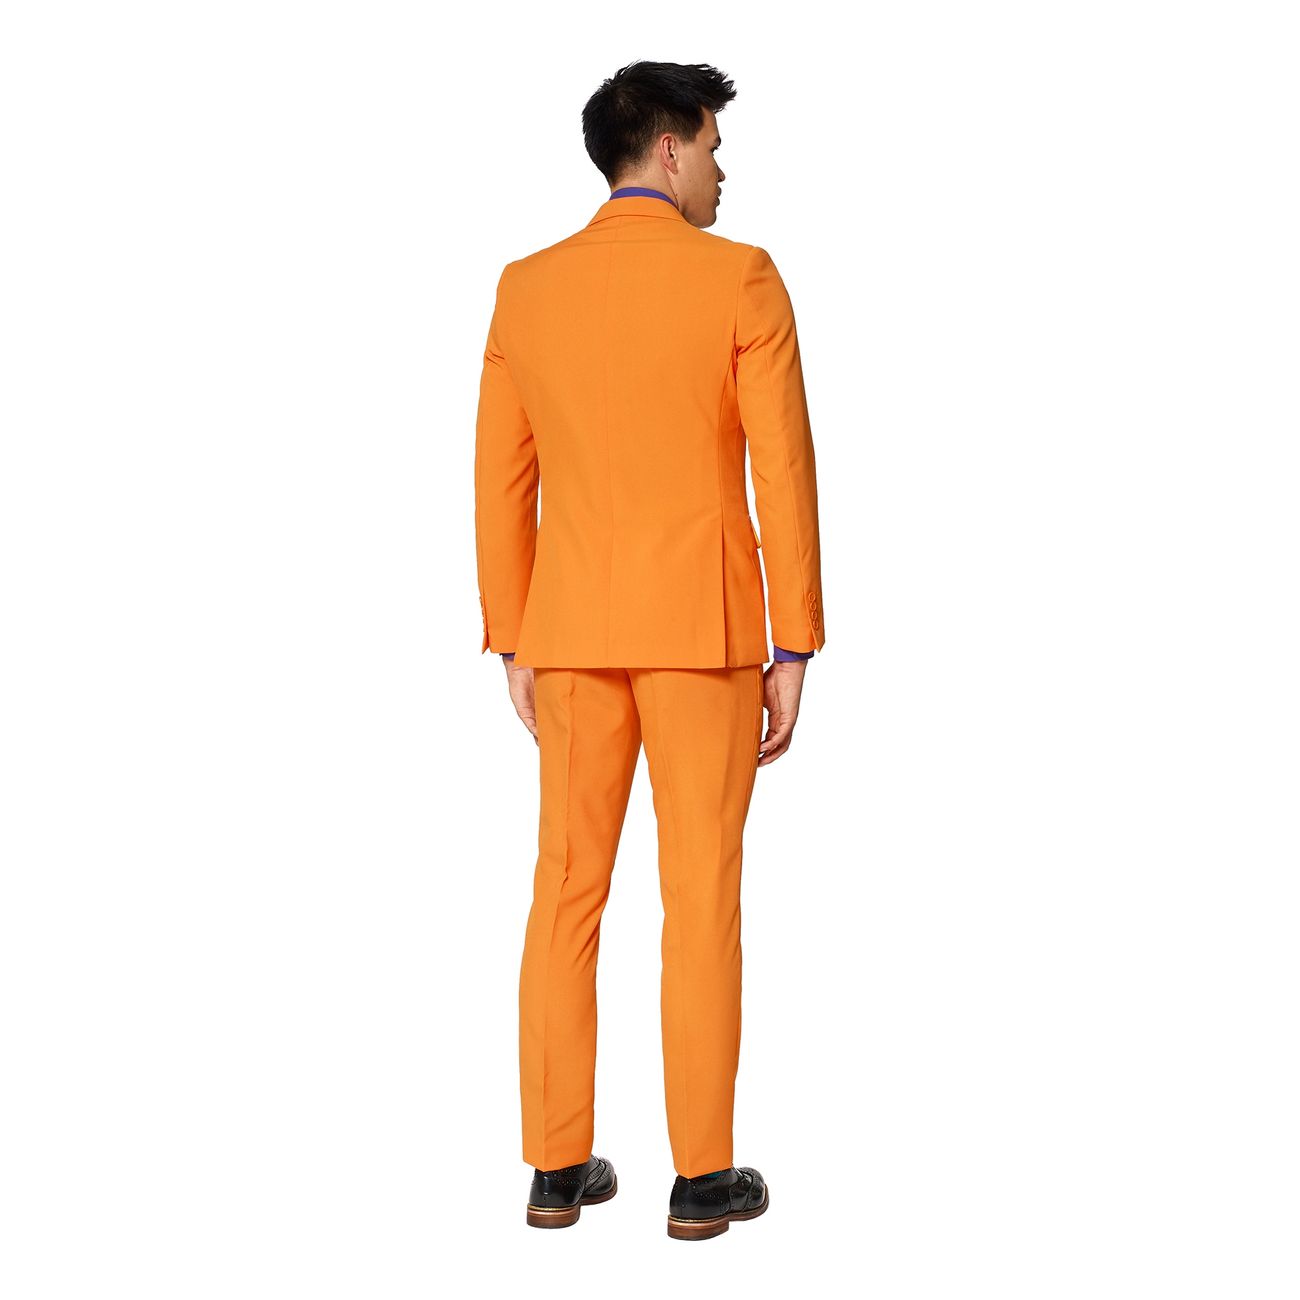 opposuits-the-orange-kostym-30601-11